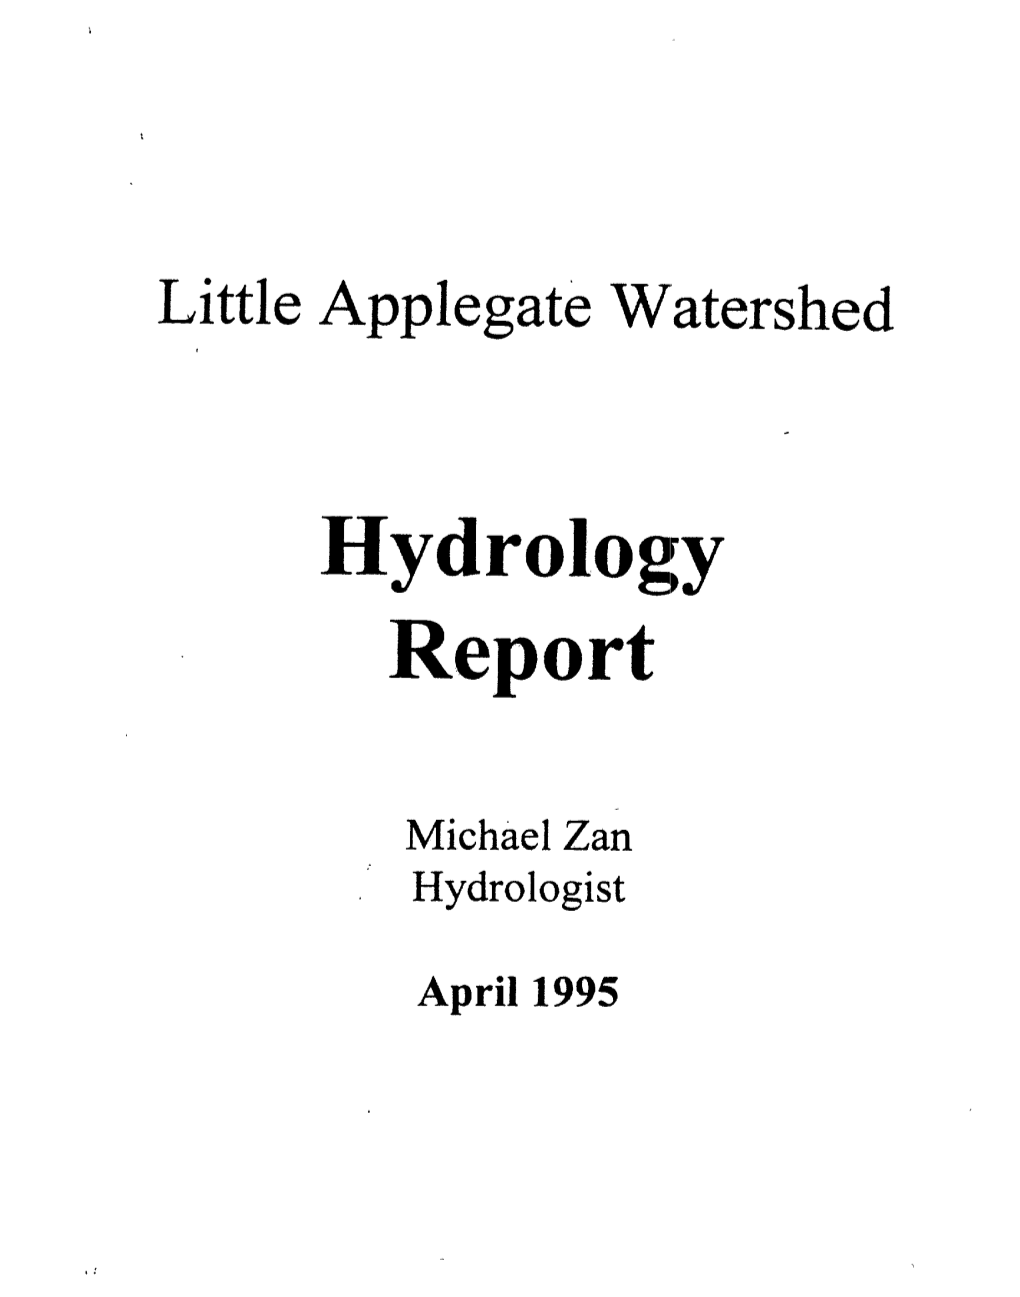 Little Applegate Hydrology Report